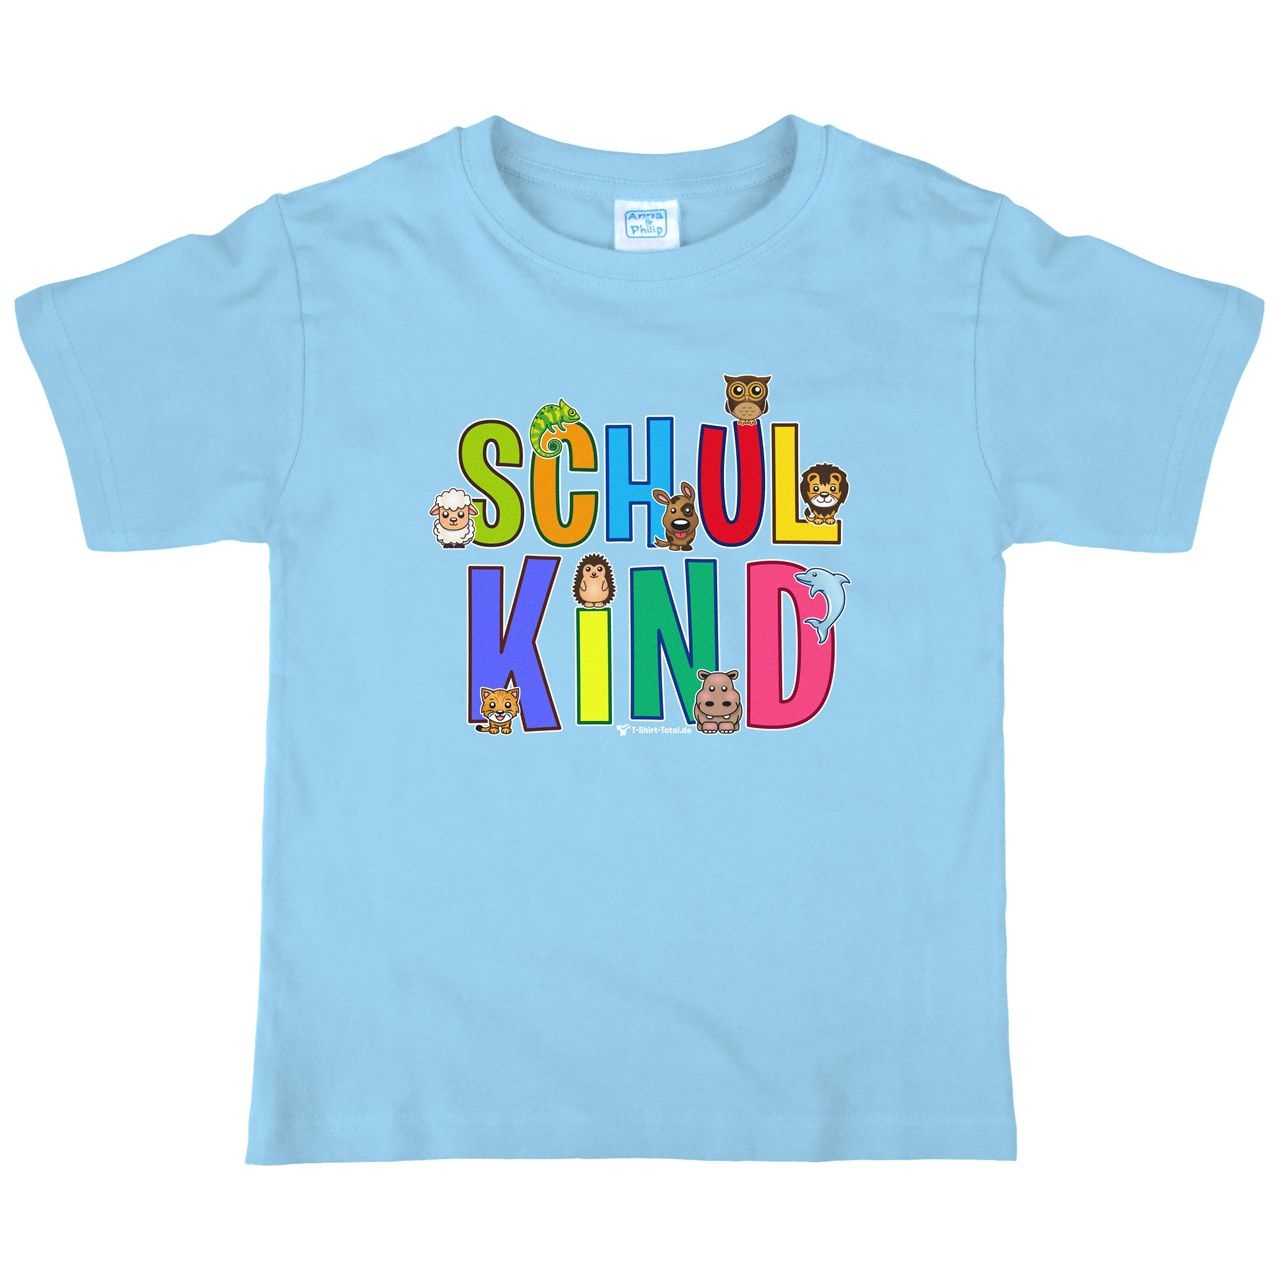 Schulkind Tiere Kinder T-Shirt mit Namen hellblau 122 / 128